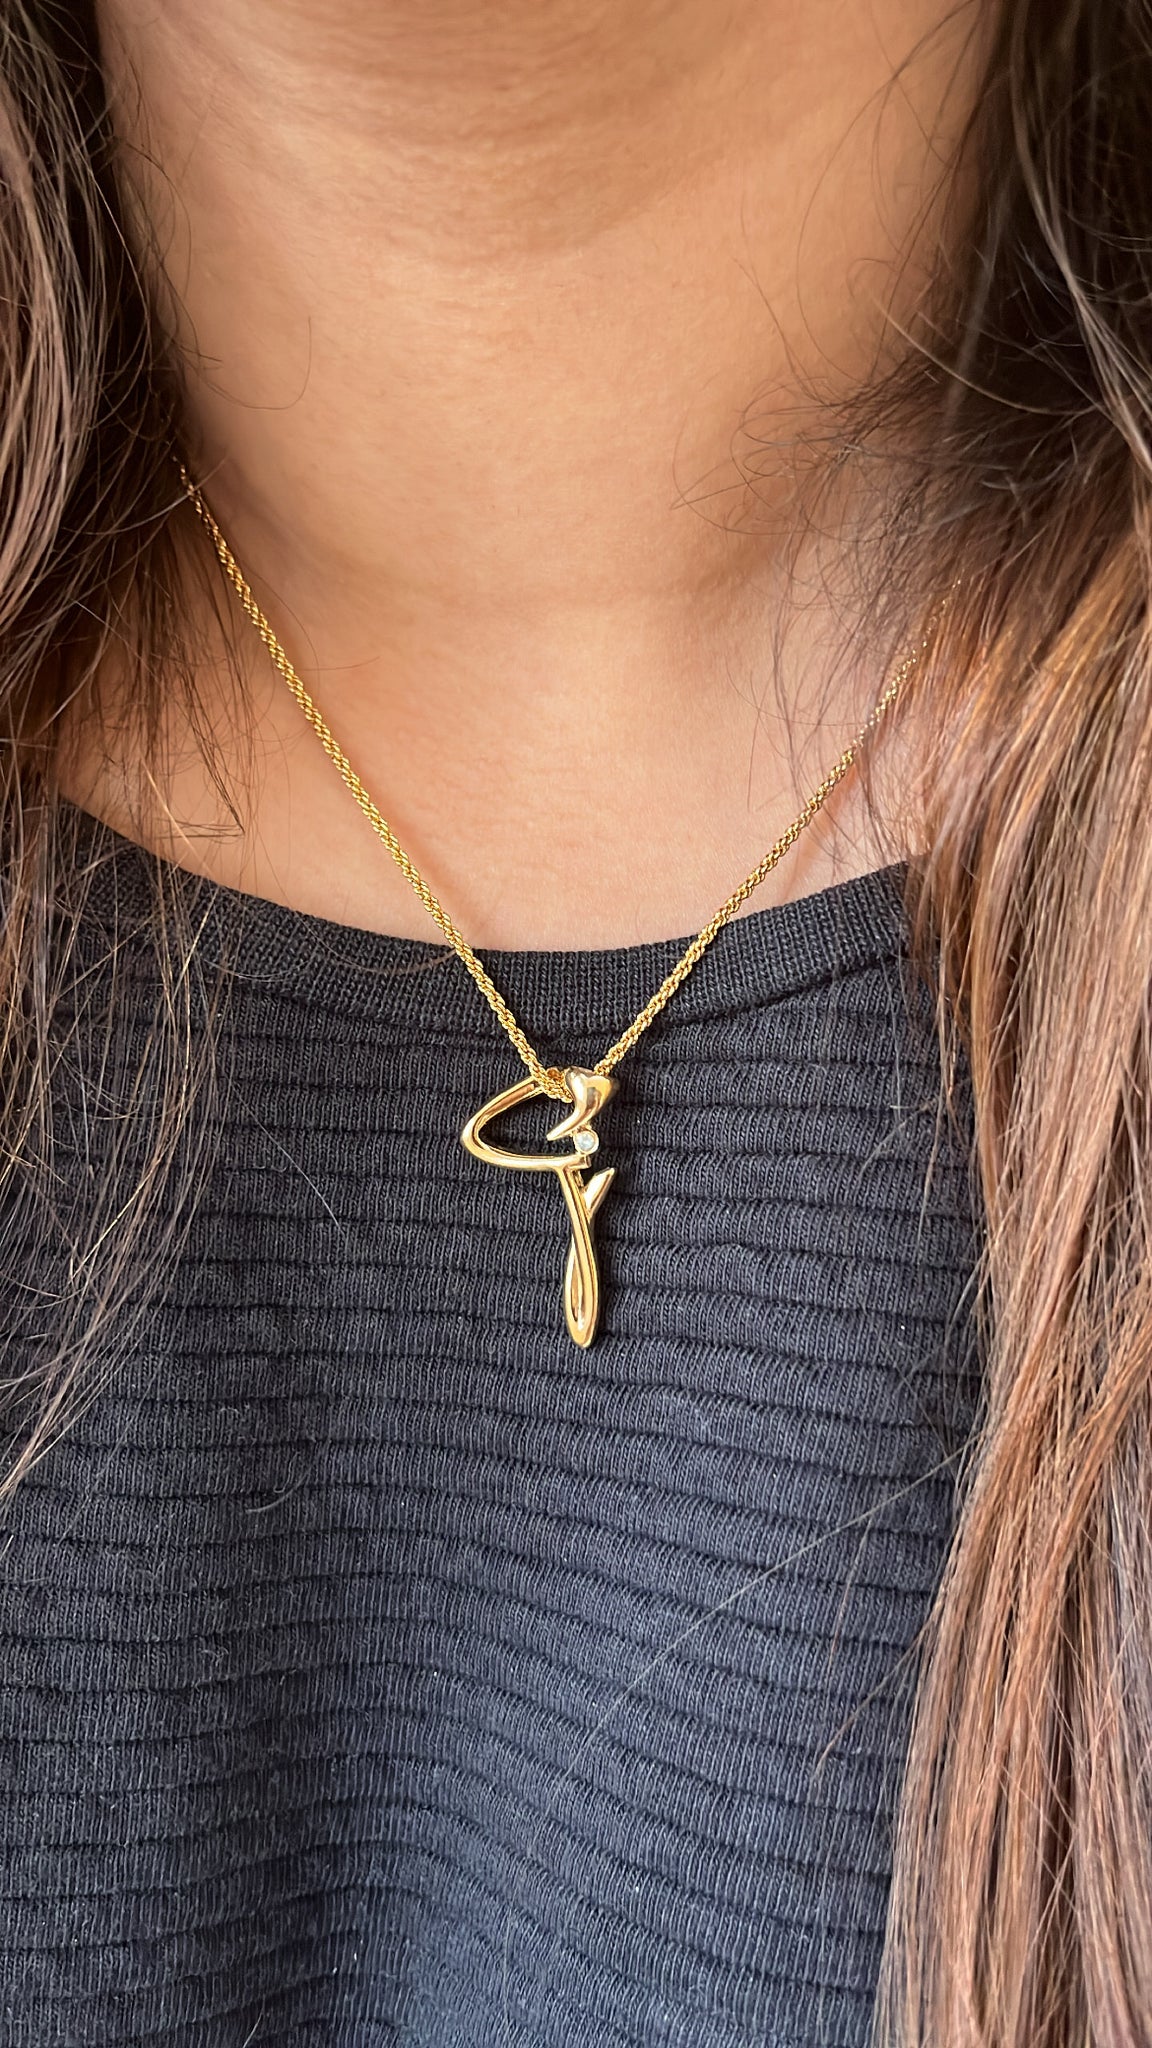 Biohazard Symbol Pendant Necklace ⋆ It's Just So You